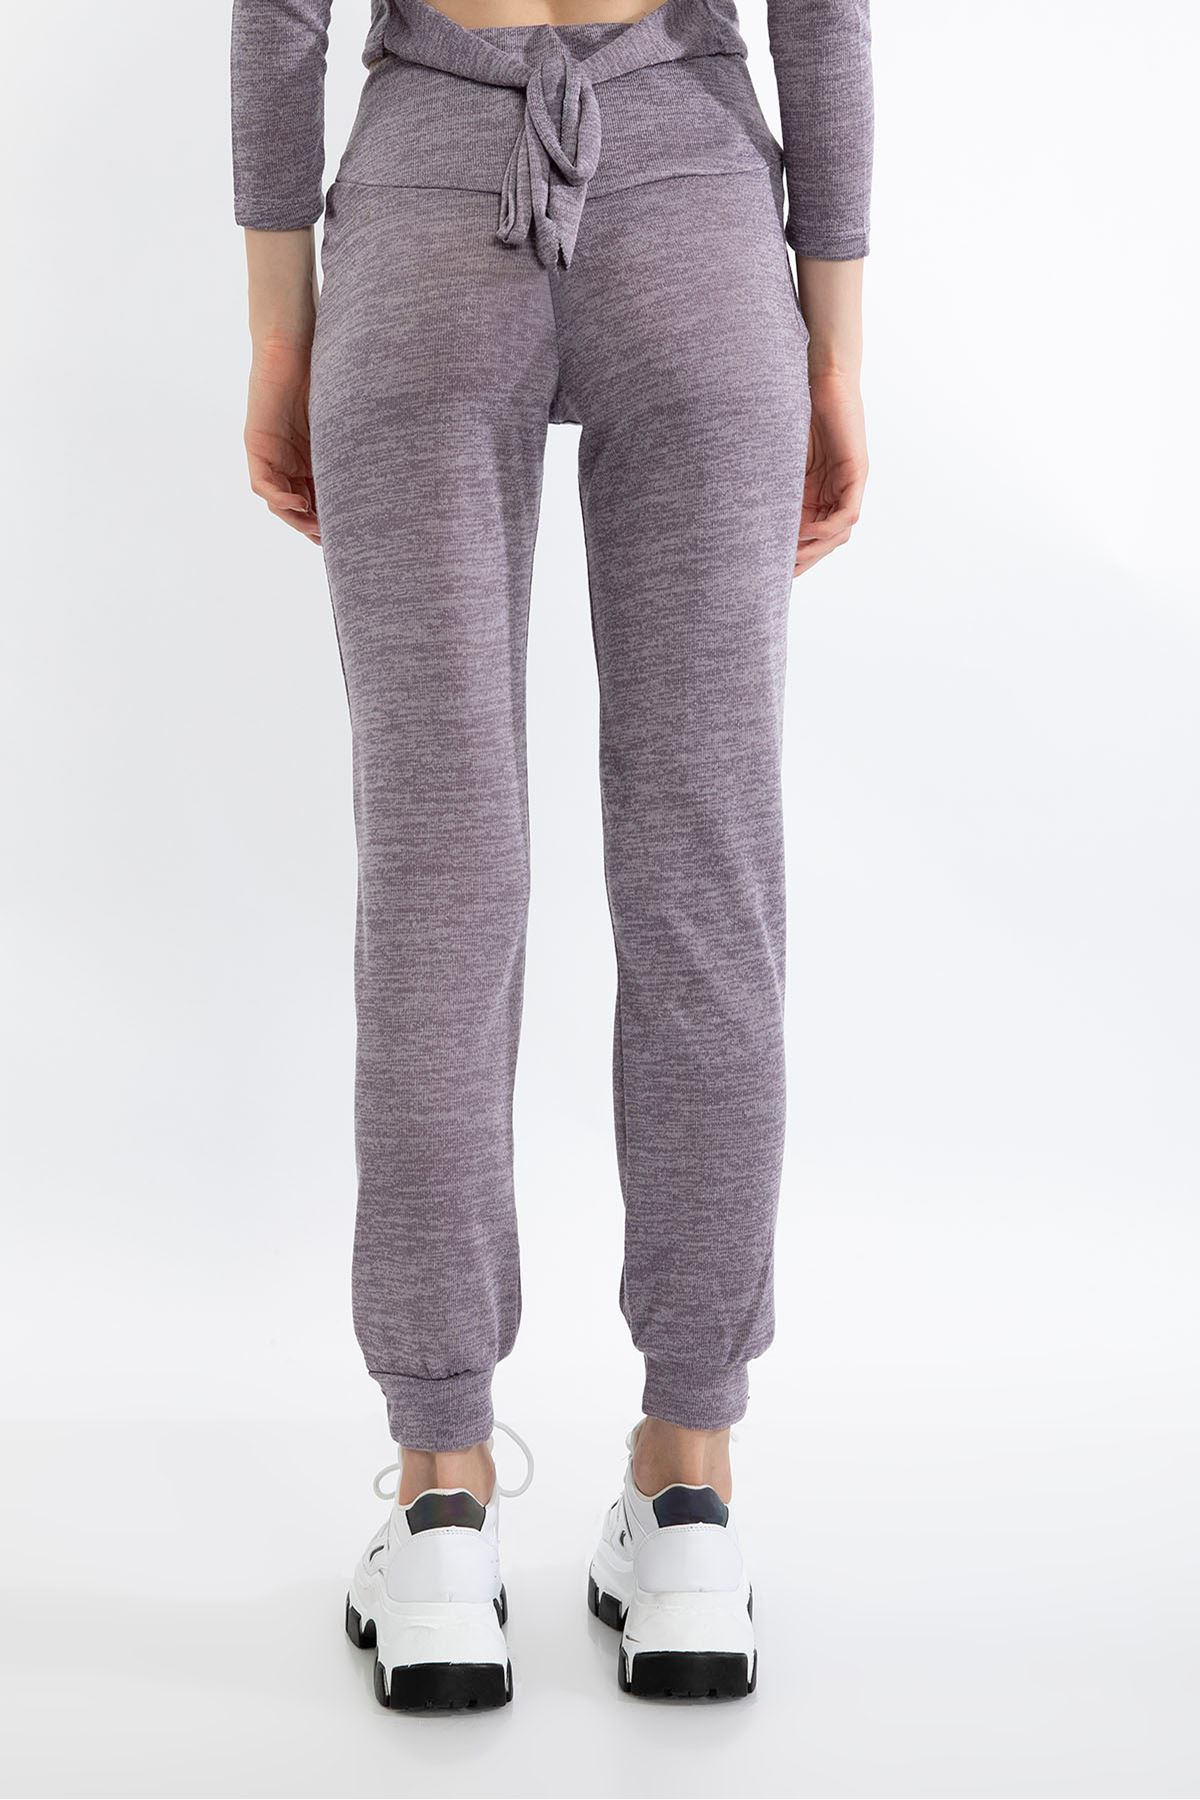 Melange Fabric Long Comfy Fit Gray Women'S Trouser - Light Pink